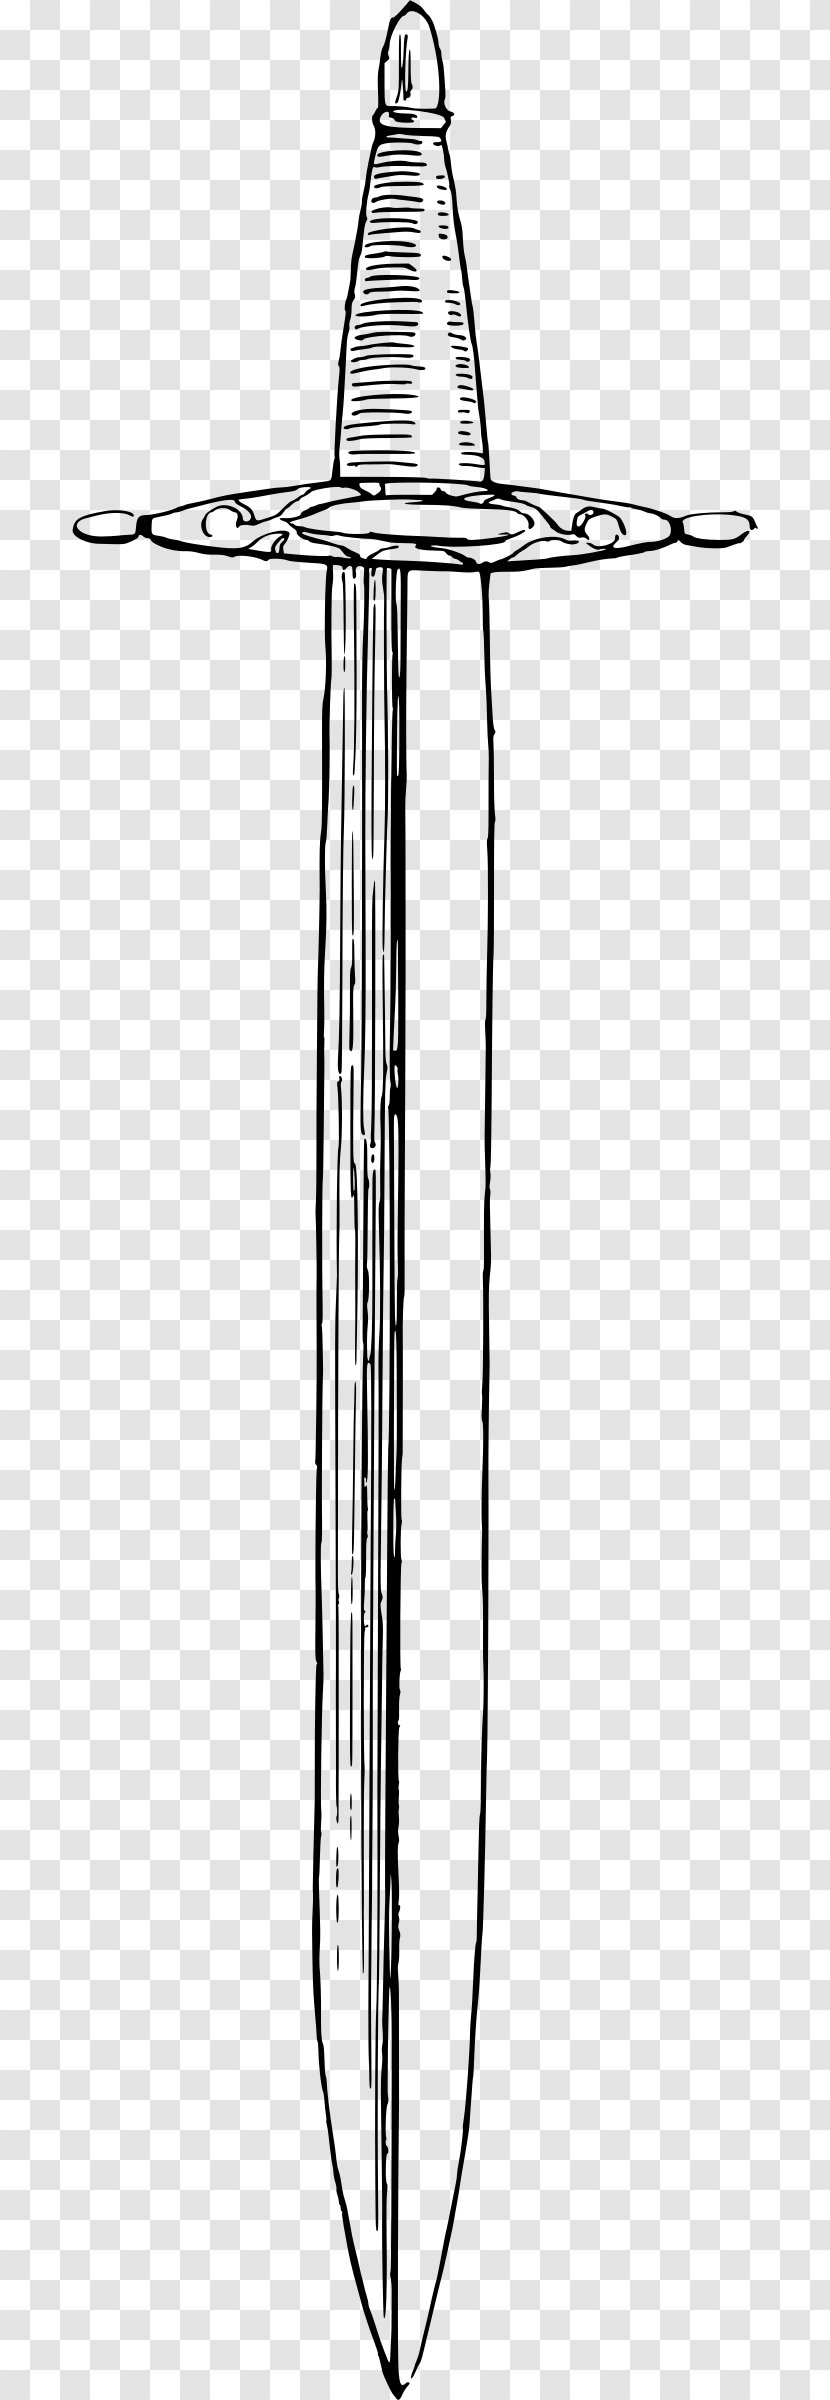 Sword Weapon Clip Art - Black And White - Swords Transparent PNG